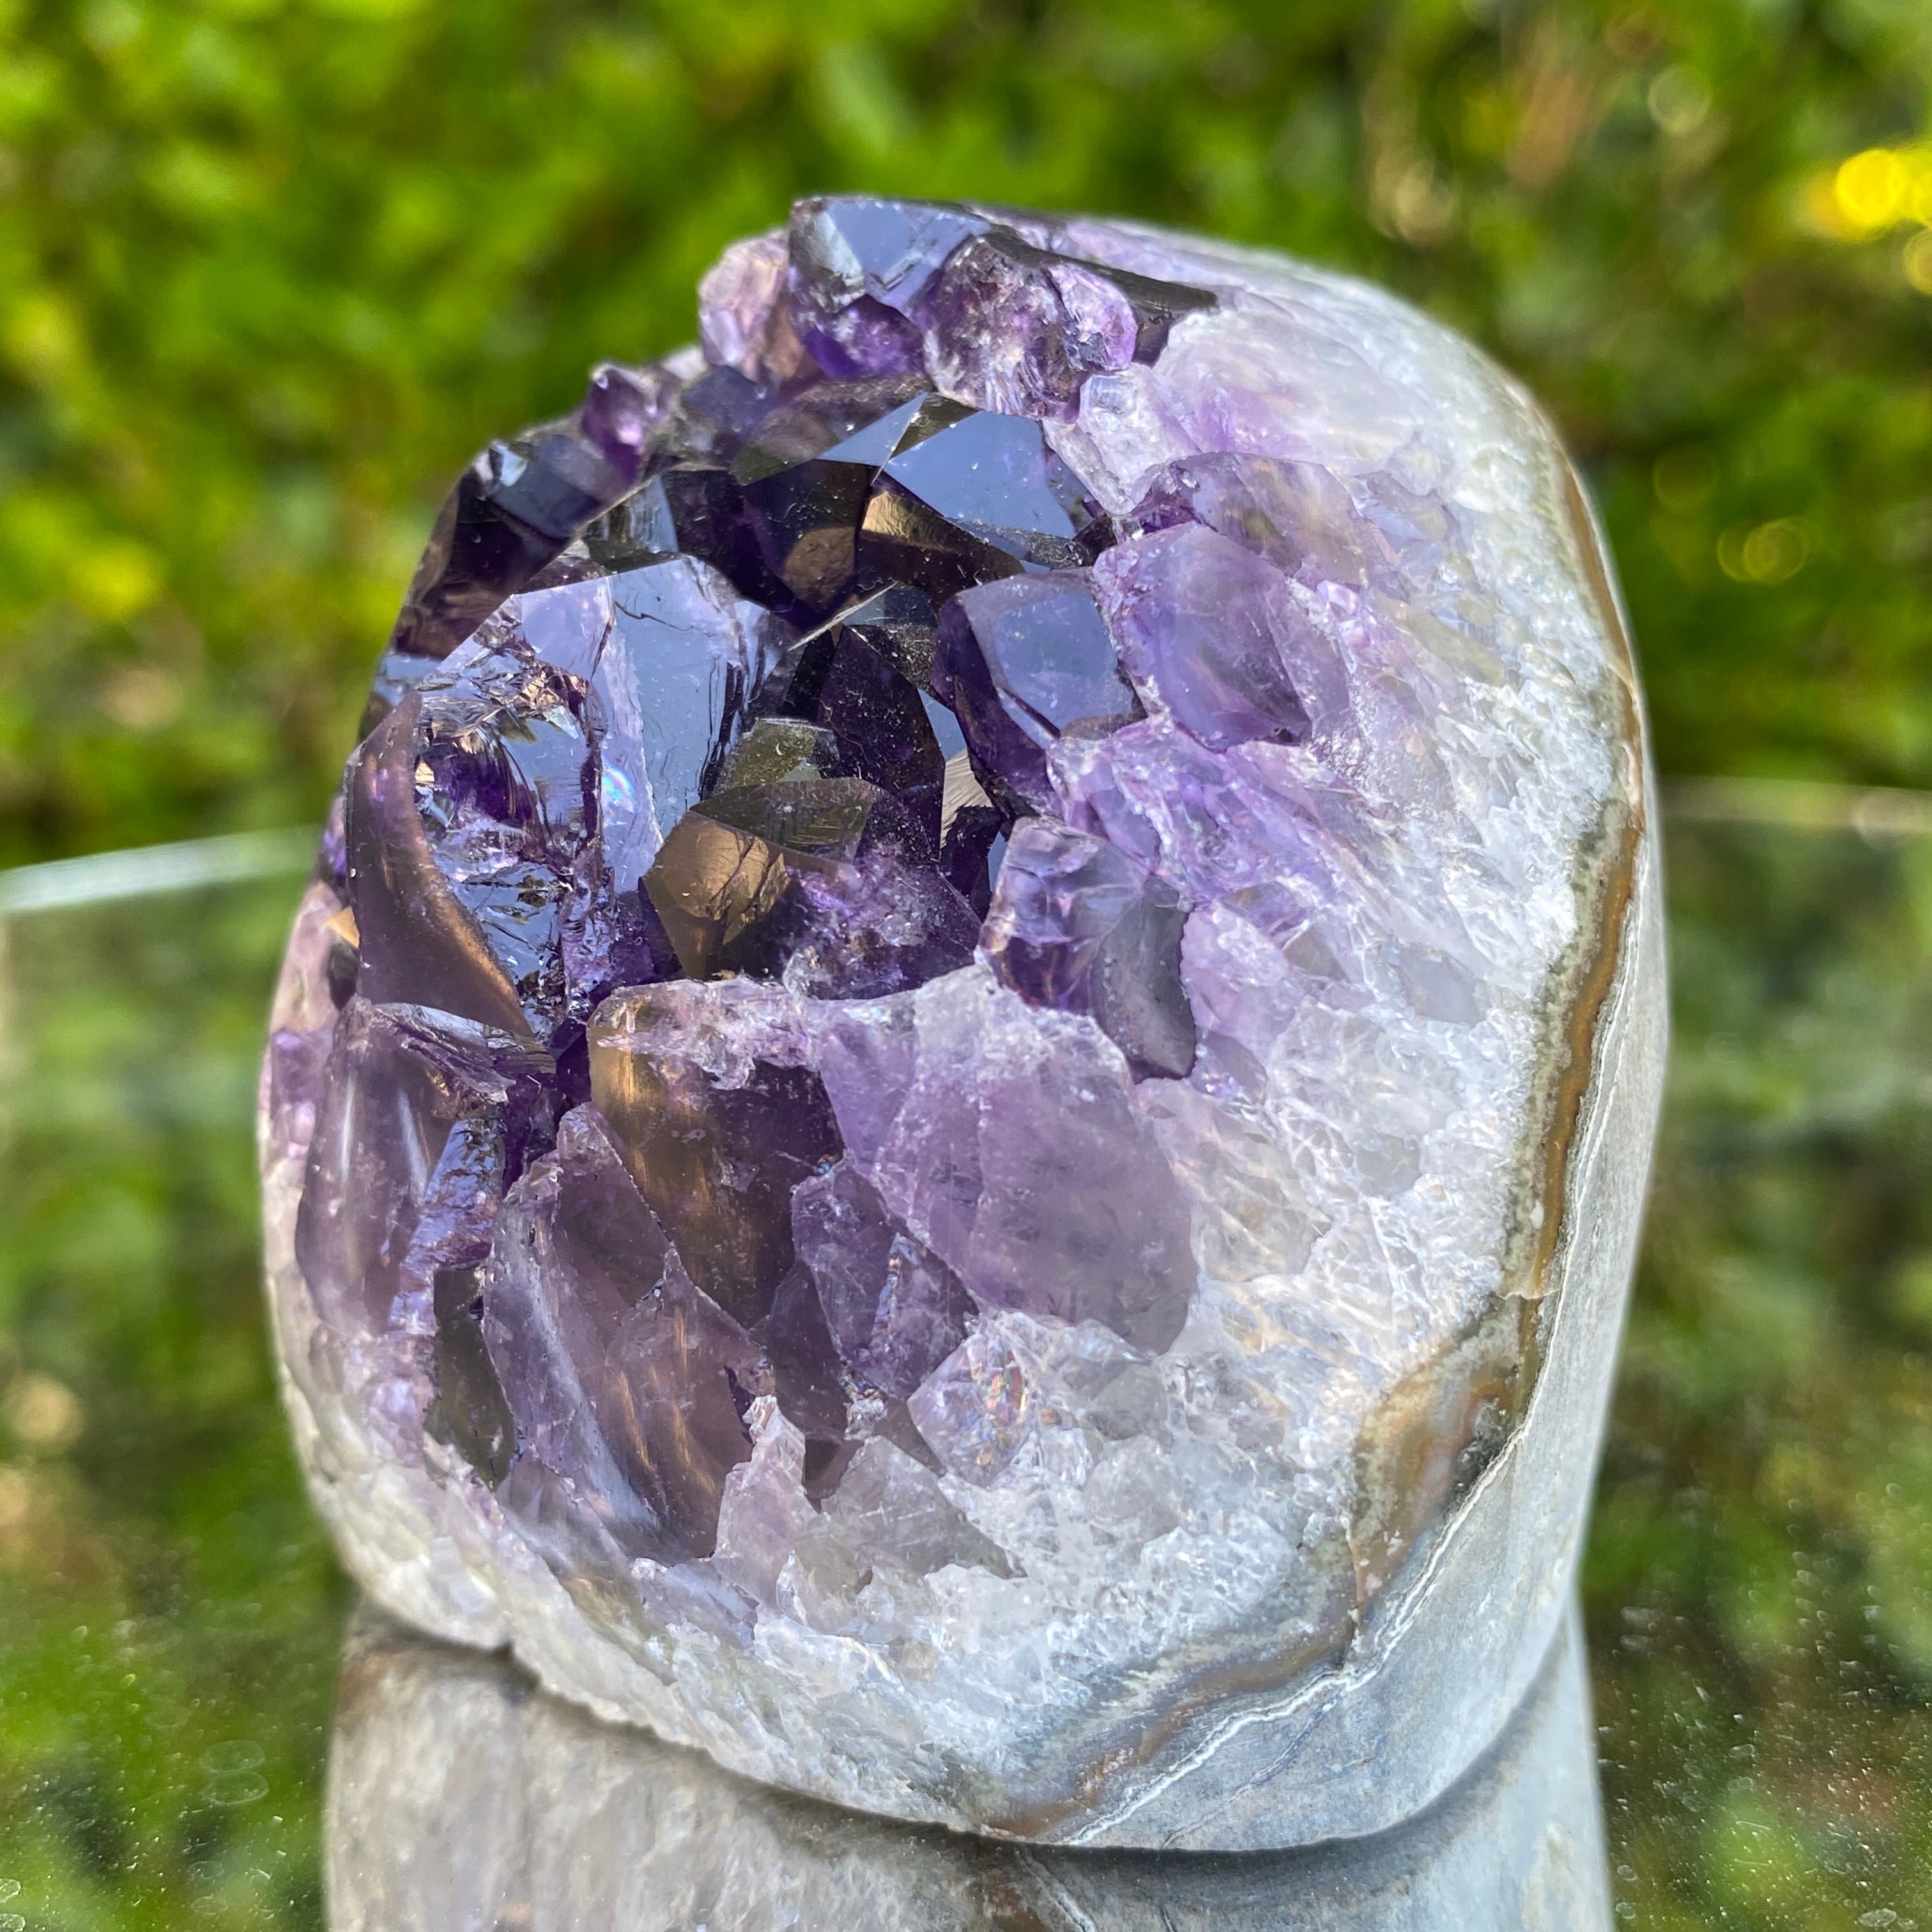 304g 7x6x6cm Grade A+ Big Smooth Crystal Purple Amethyst Geode from Uruguay